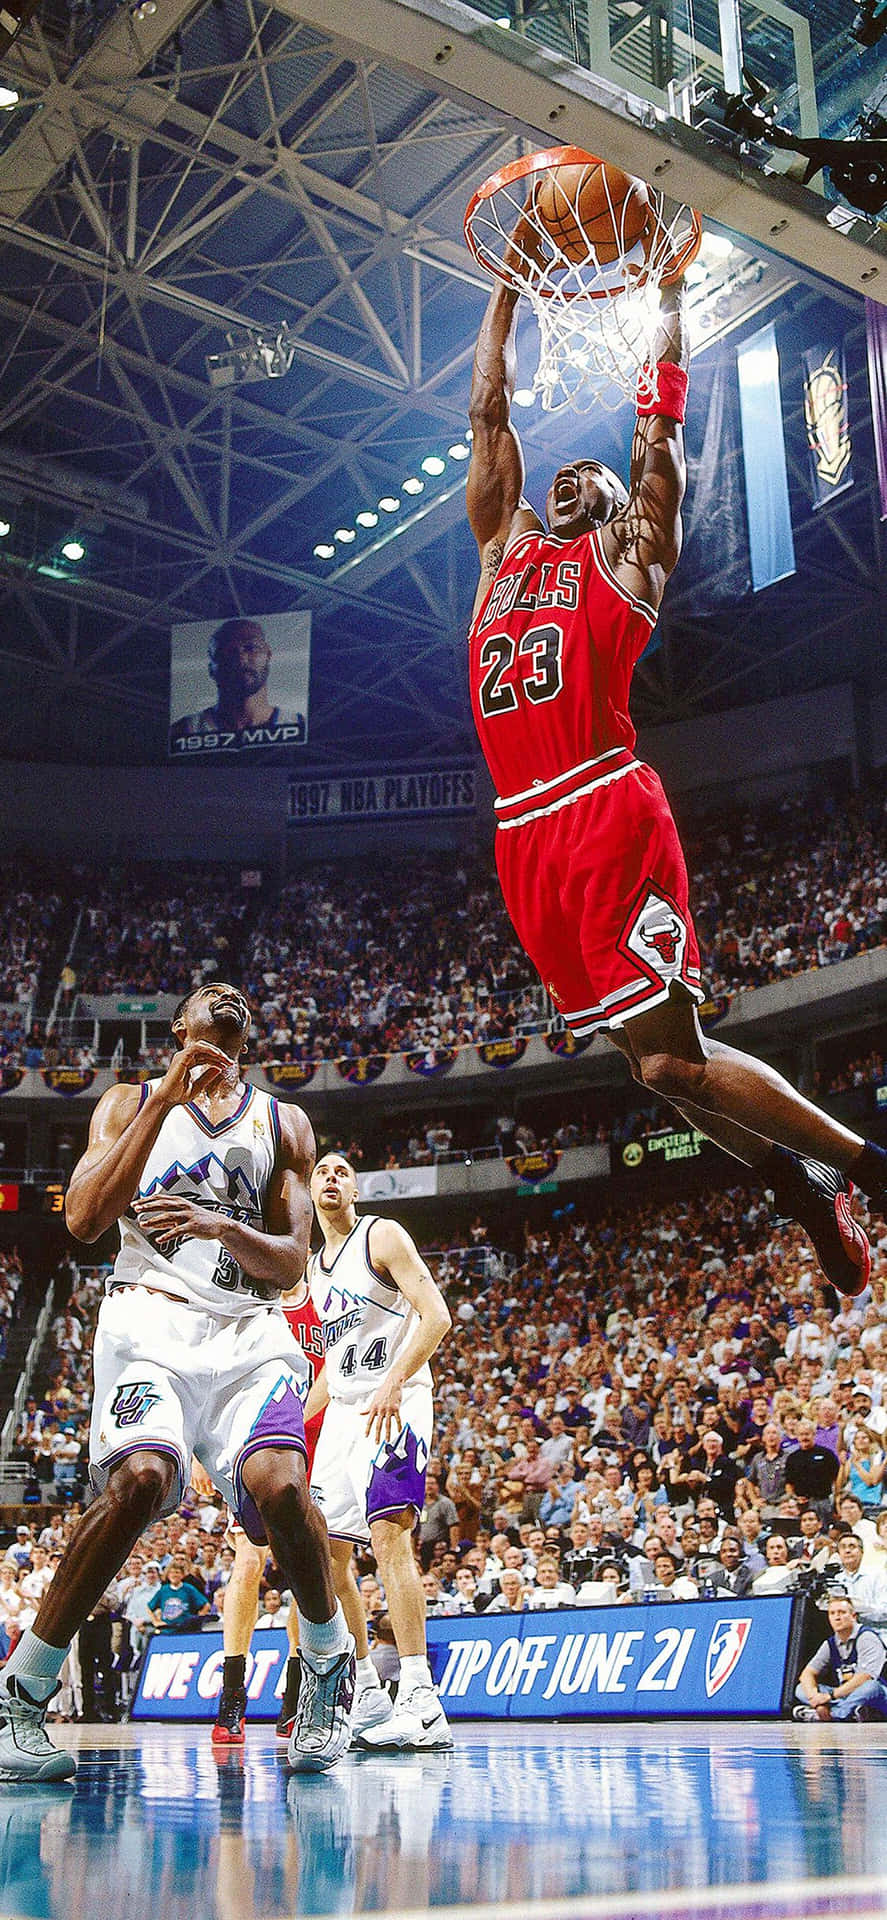 Michael Jordan displays his new limited edition personalised iPhone Wallpaper